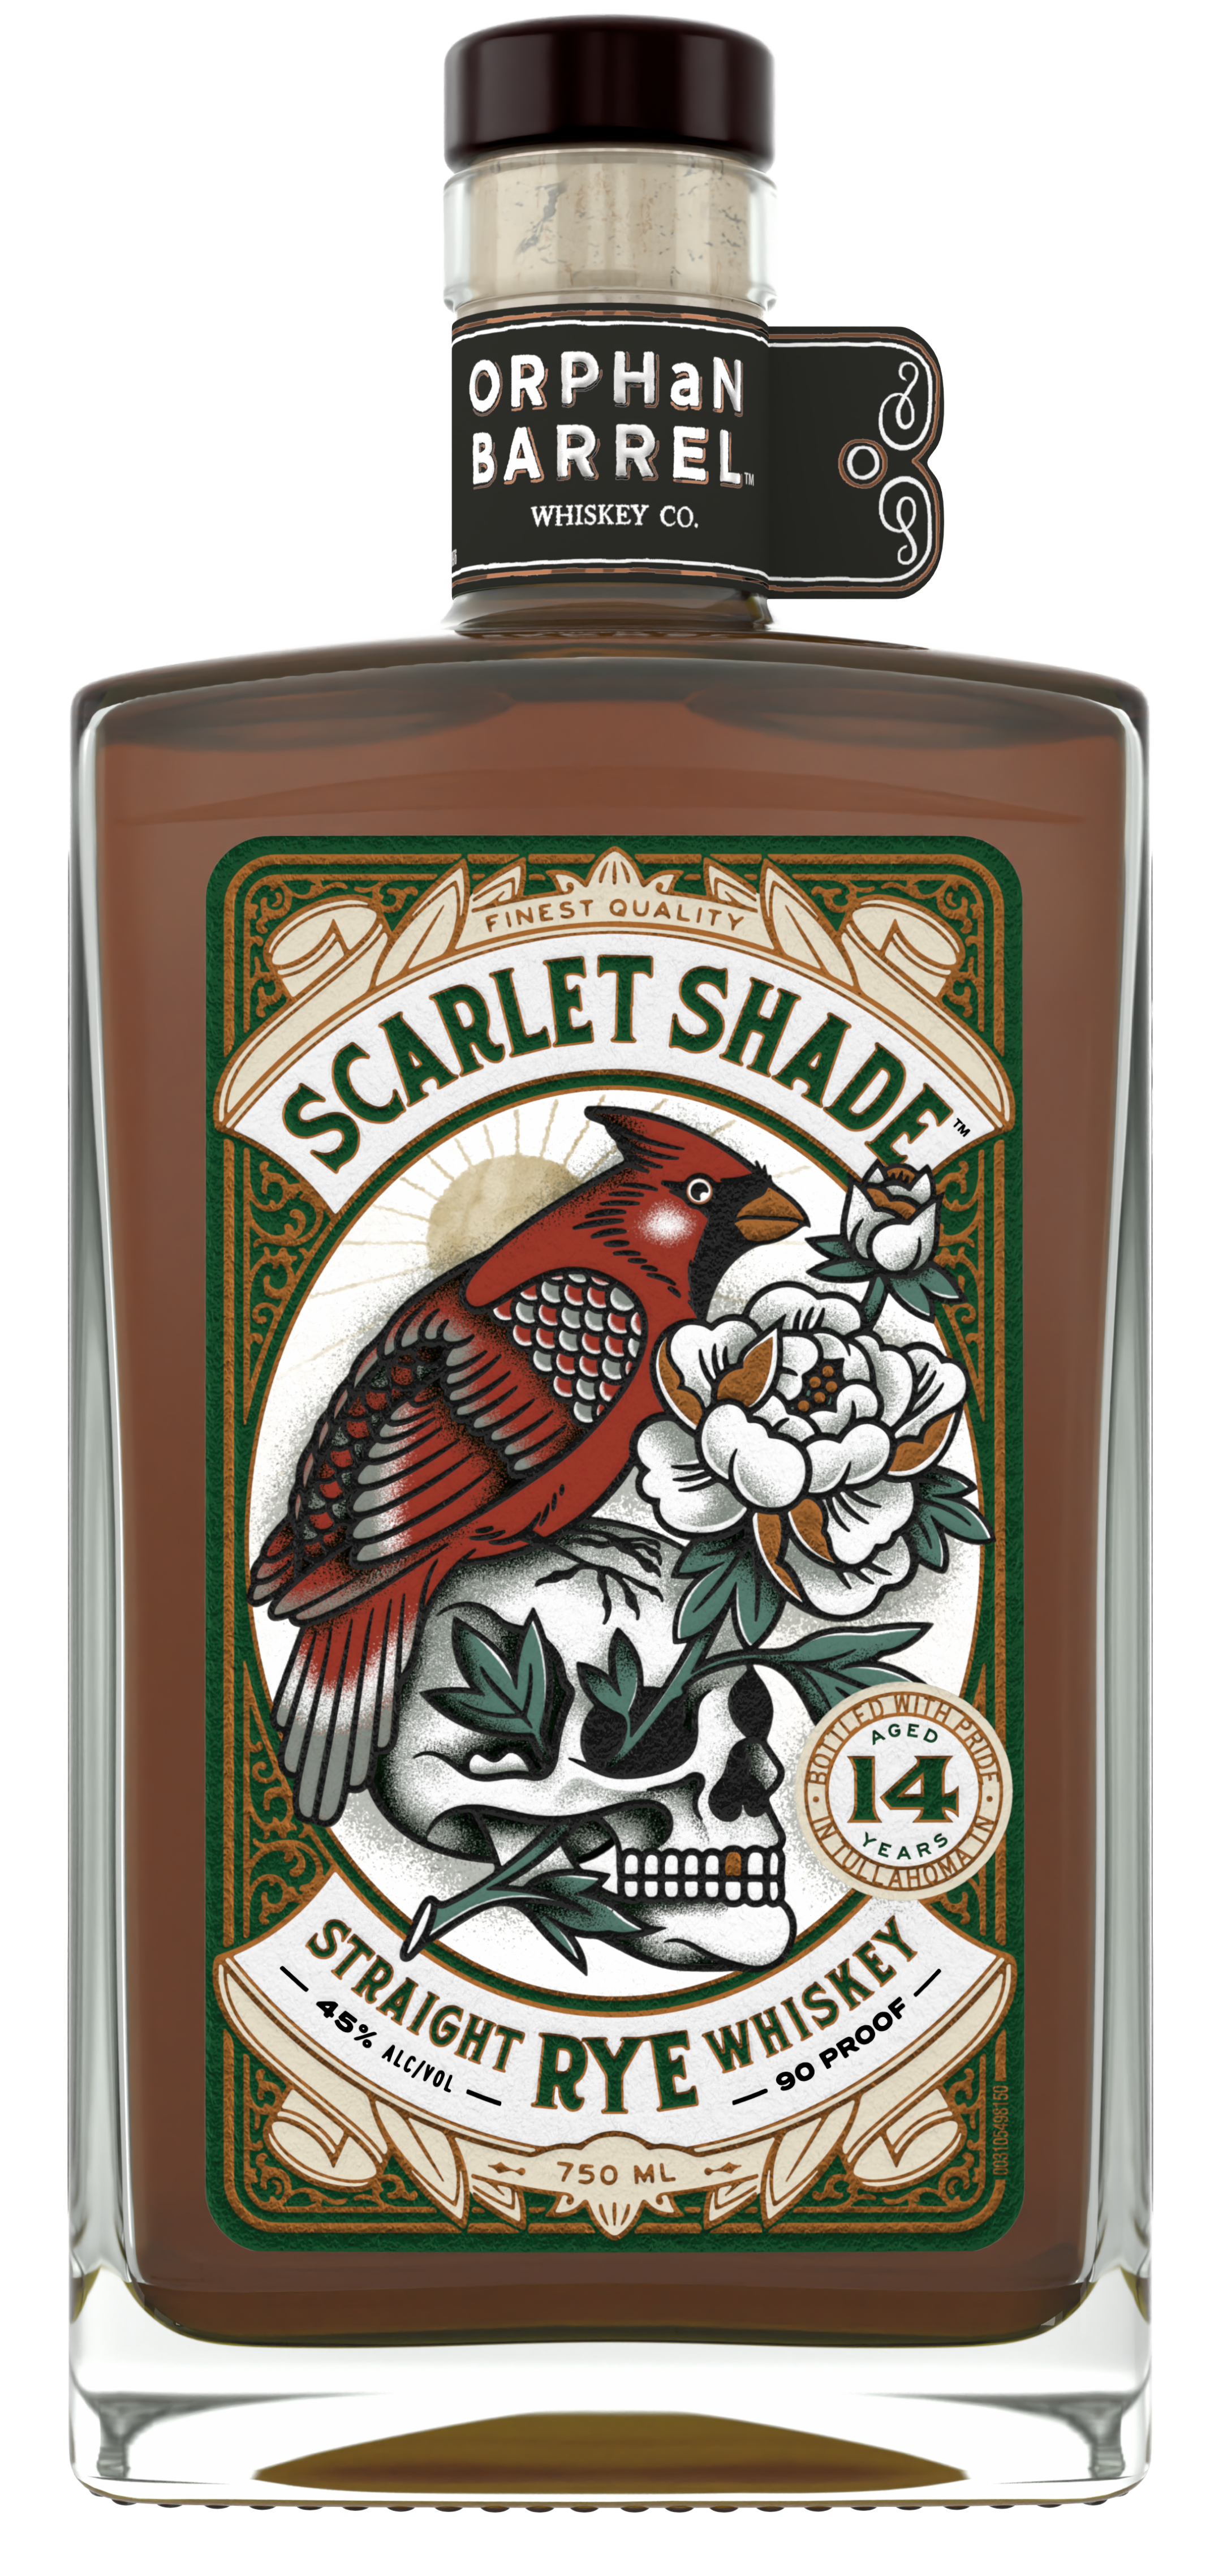 Scarlet Shade Bourbon Whiskey | Orphan Barrel Whiskey